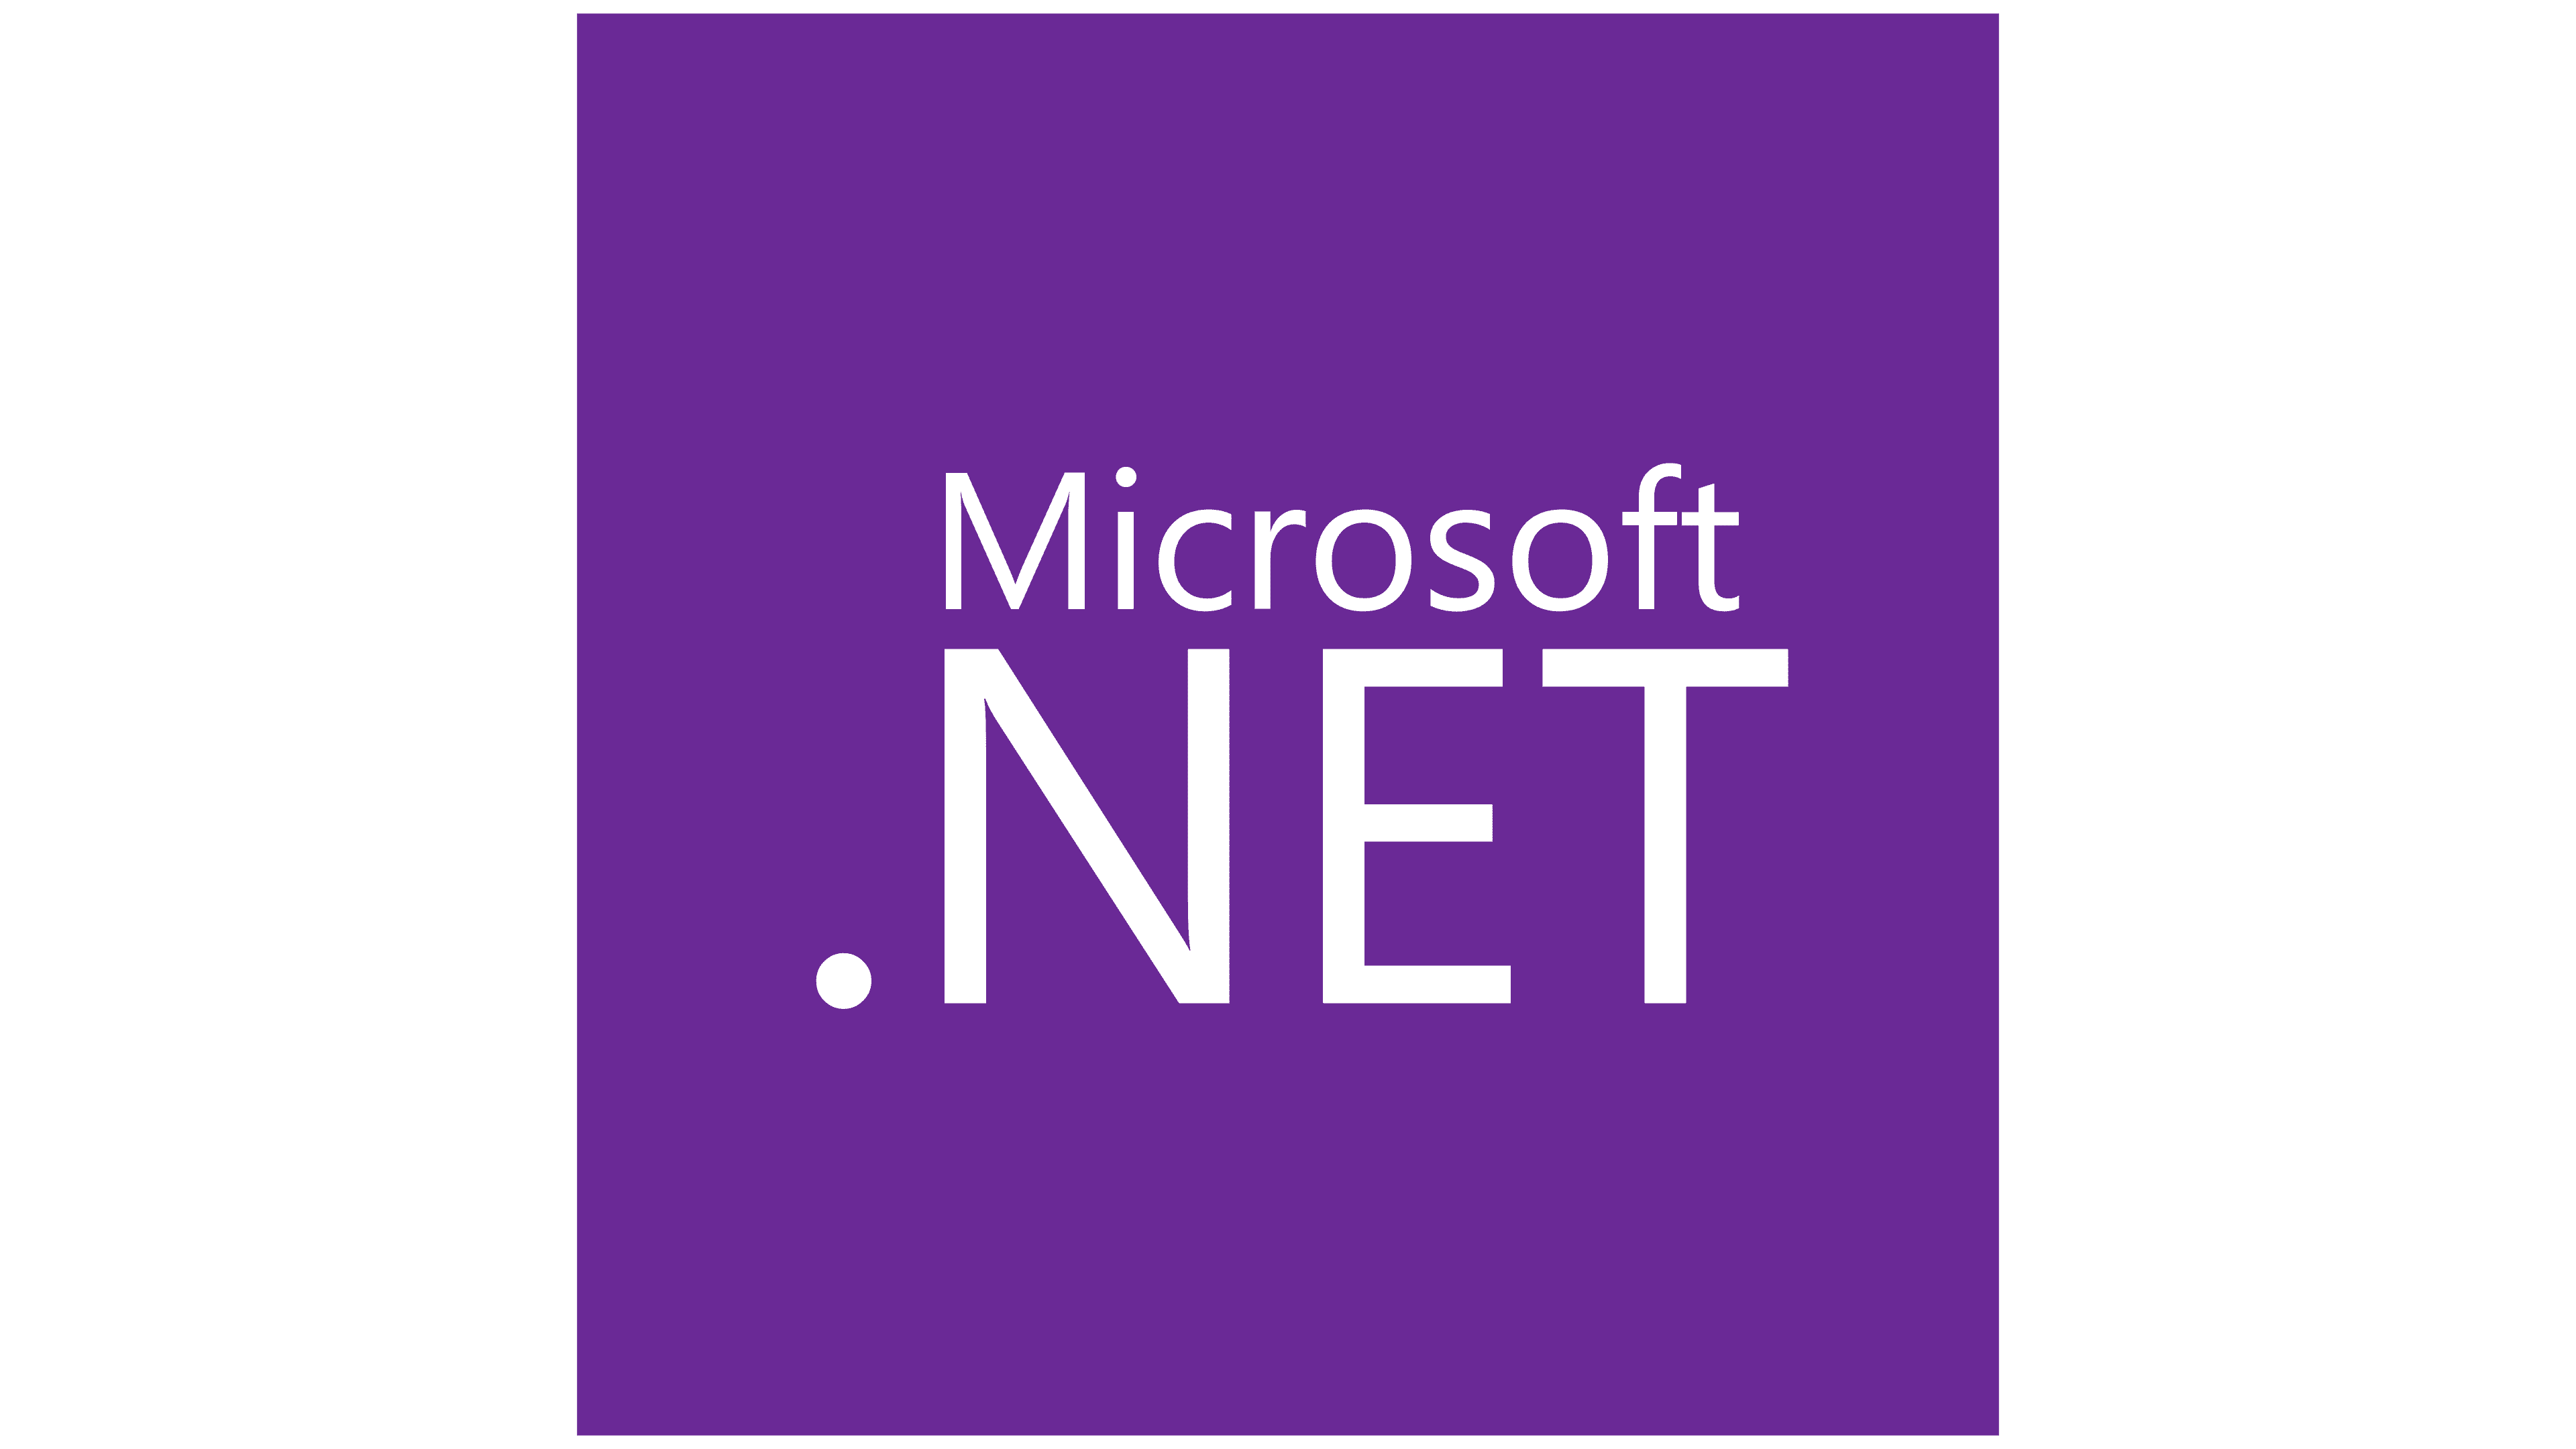 Https net framework. Net Framework. Framework логотип. Microsoft net логотип. Иконка Microsoft net Framework.